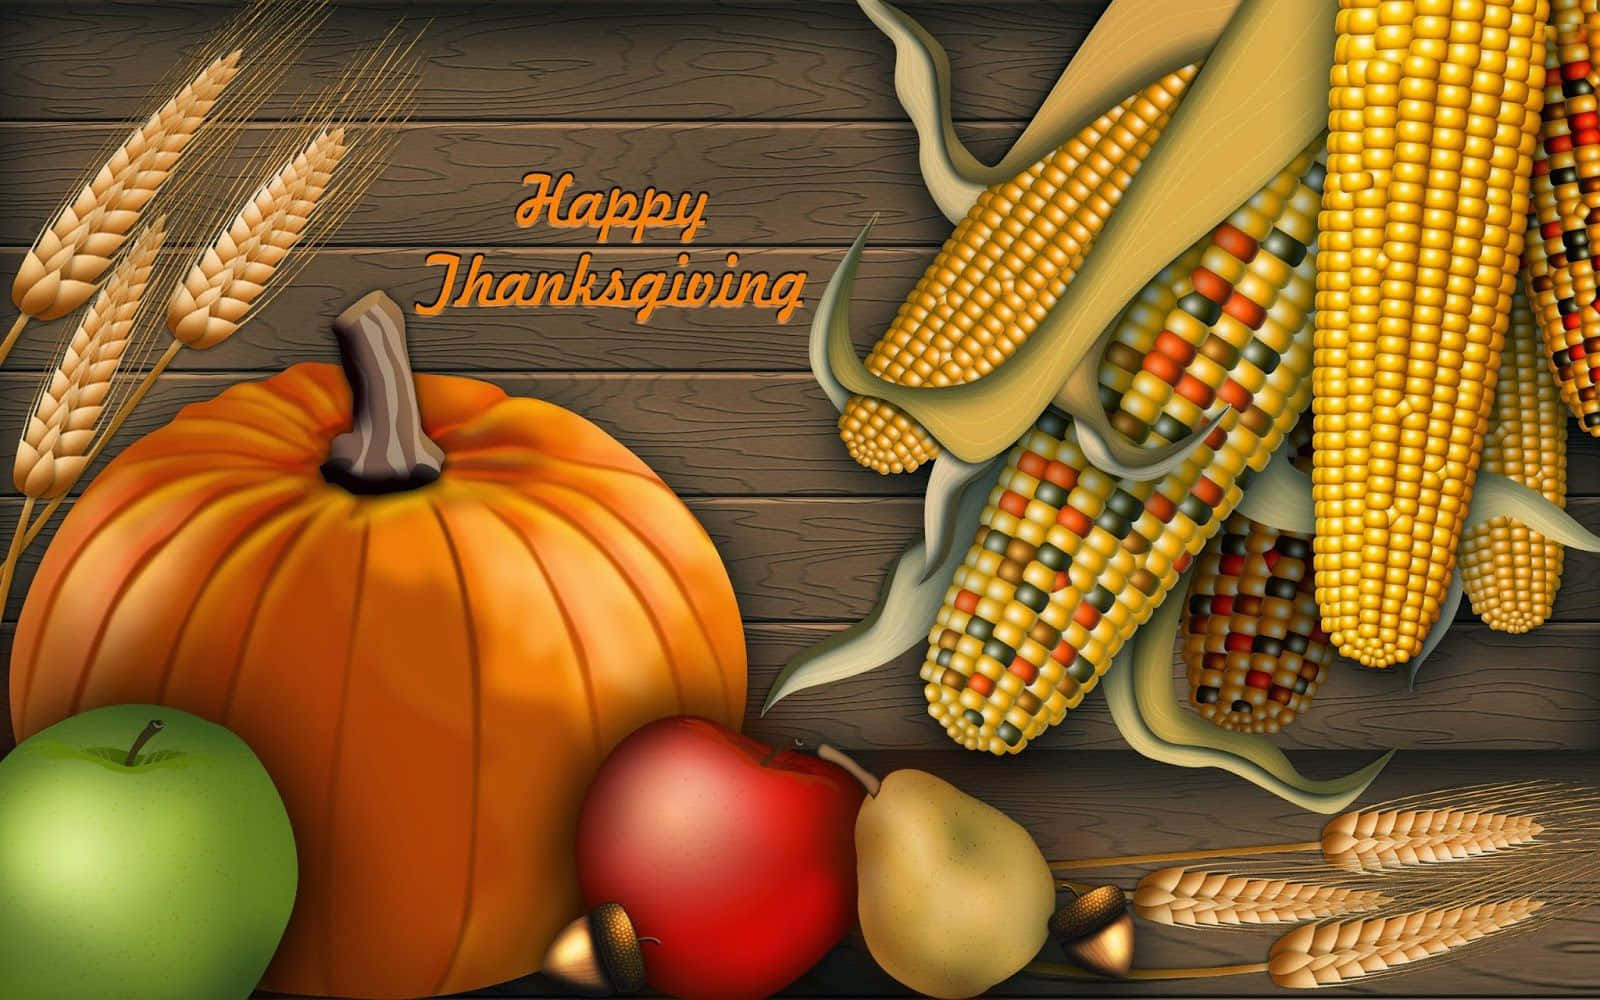 Seasonal Harvest Happy Thanksgiving Greeting Card Wooden Deck Wallpaper